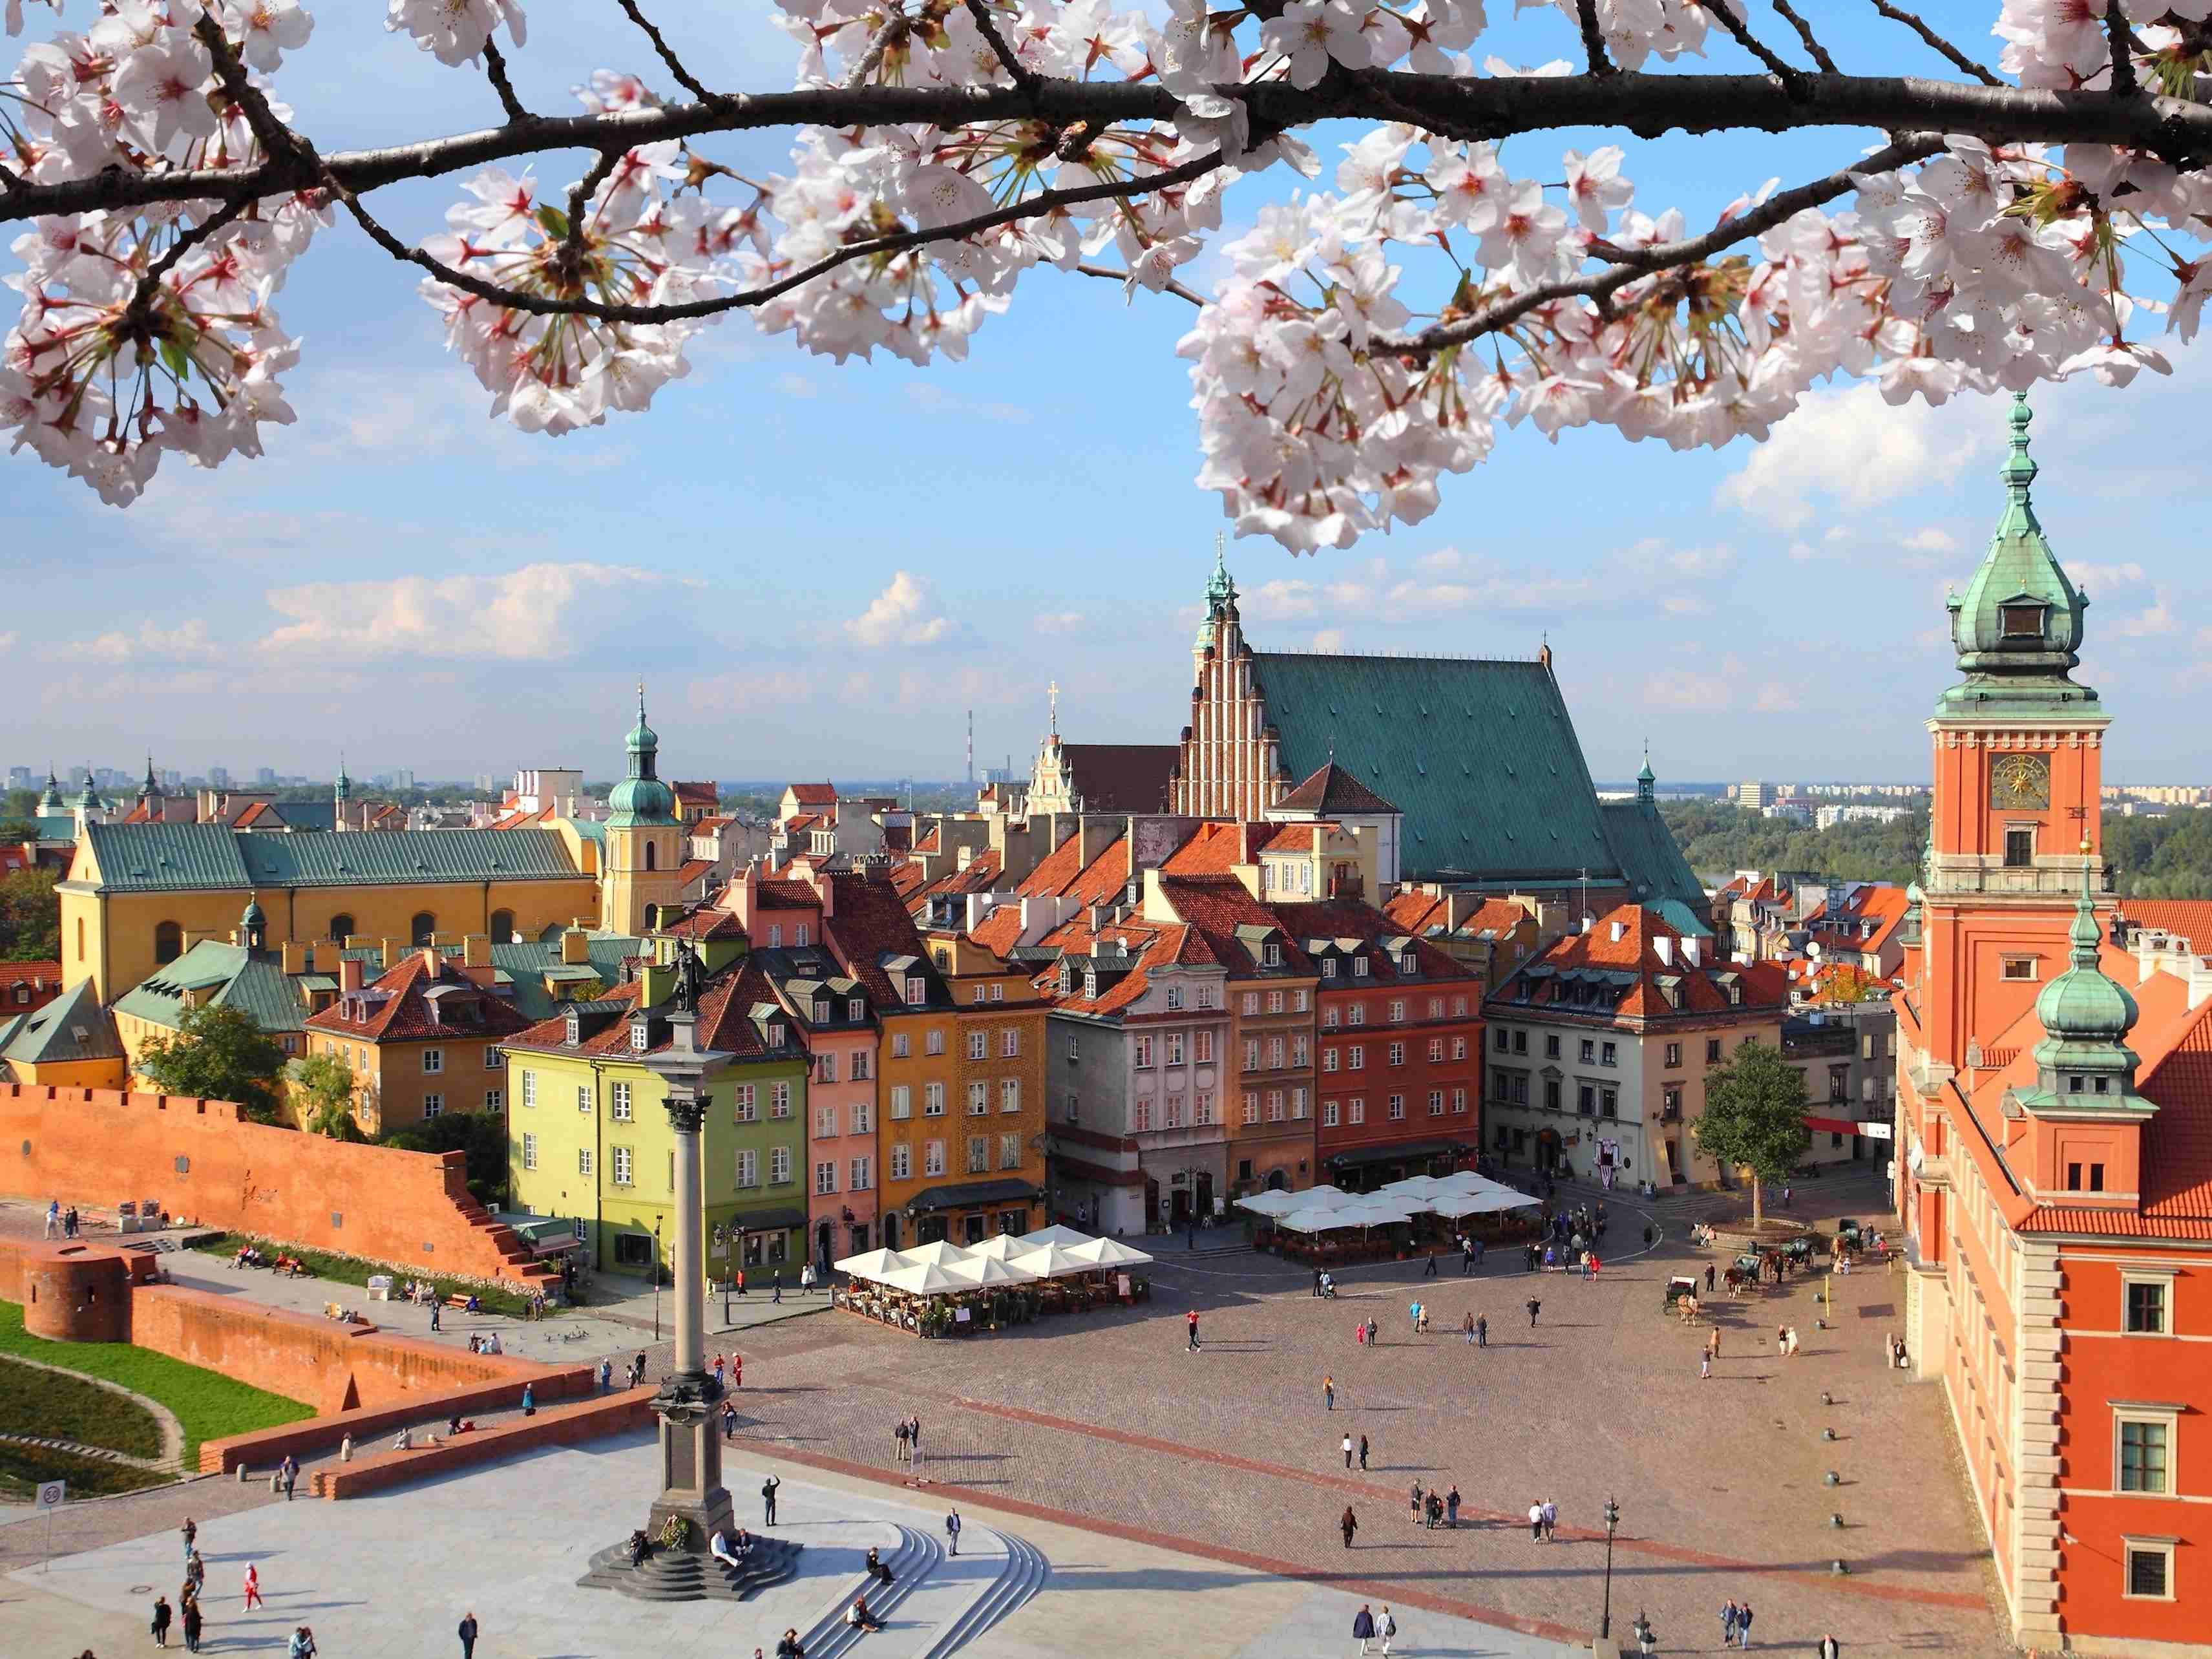 Warsaw Old Town during Spring